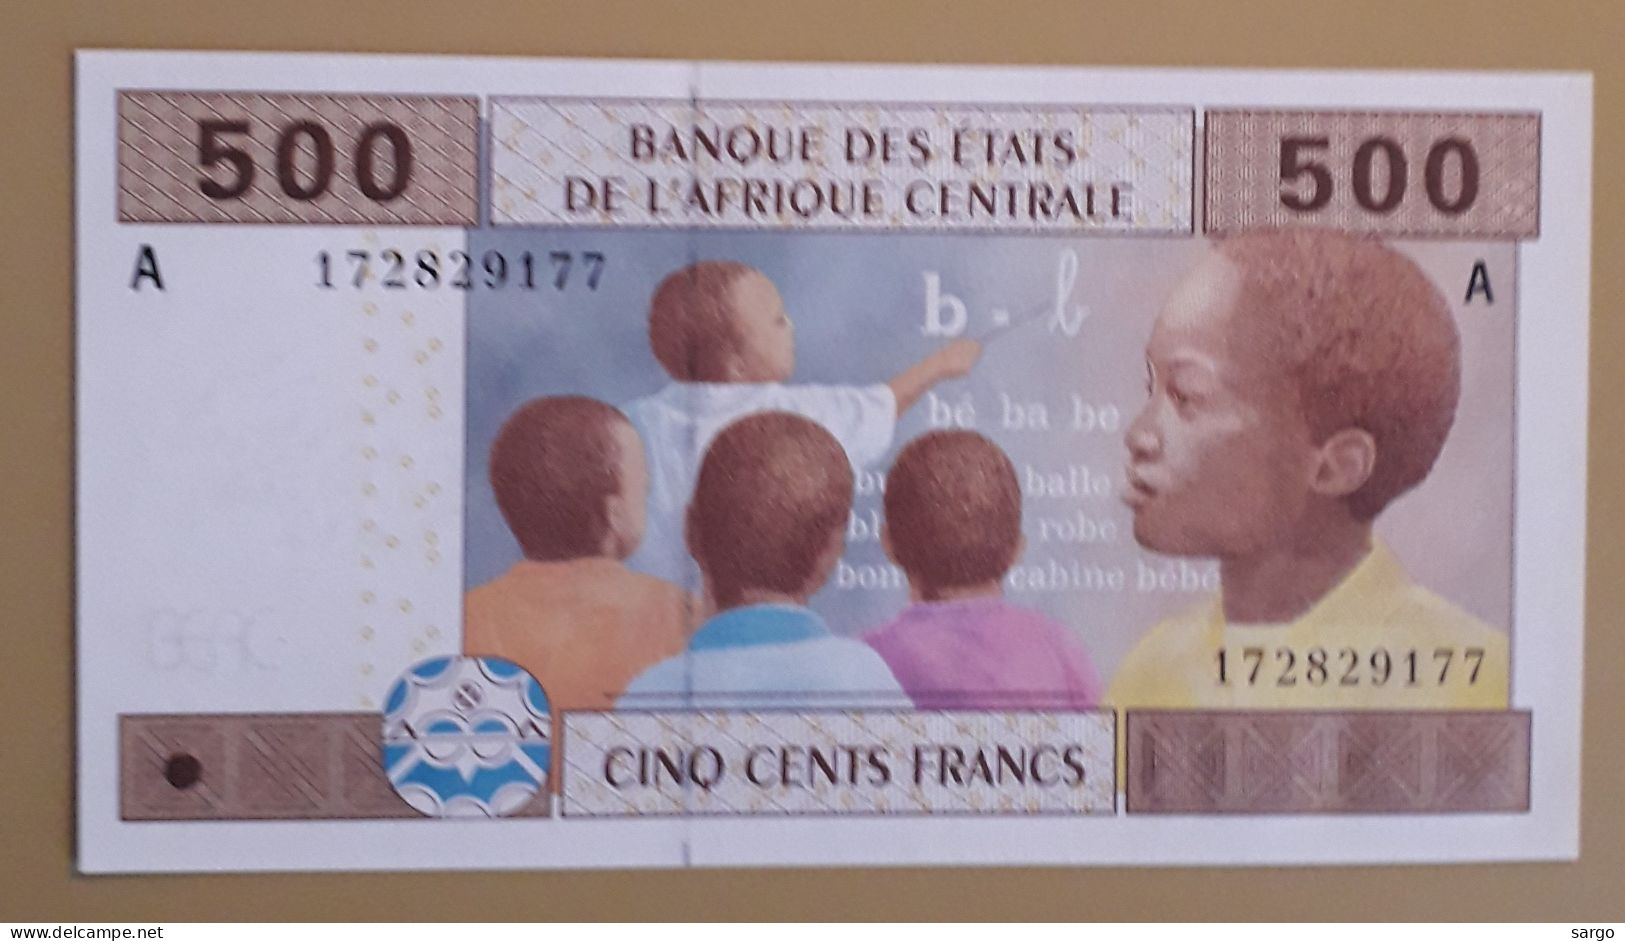 CENTRAL AFRICAN STATE - GABON - 500 FRANCS - 2002 - 2021 - UNCIRC - P 06 - BANKNOTES - PAPER MONEY - CARTAMONETA - - Central African States